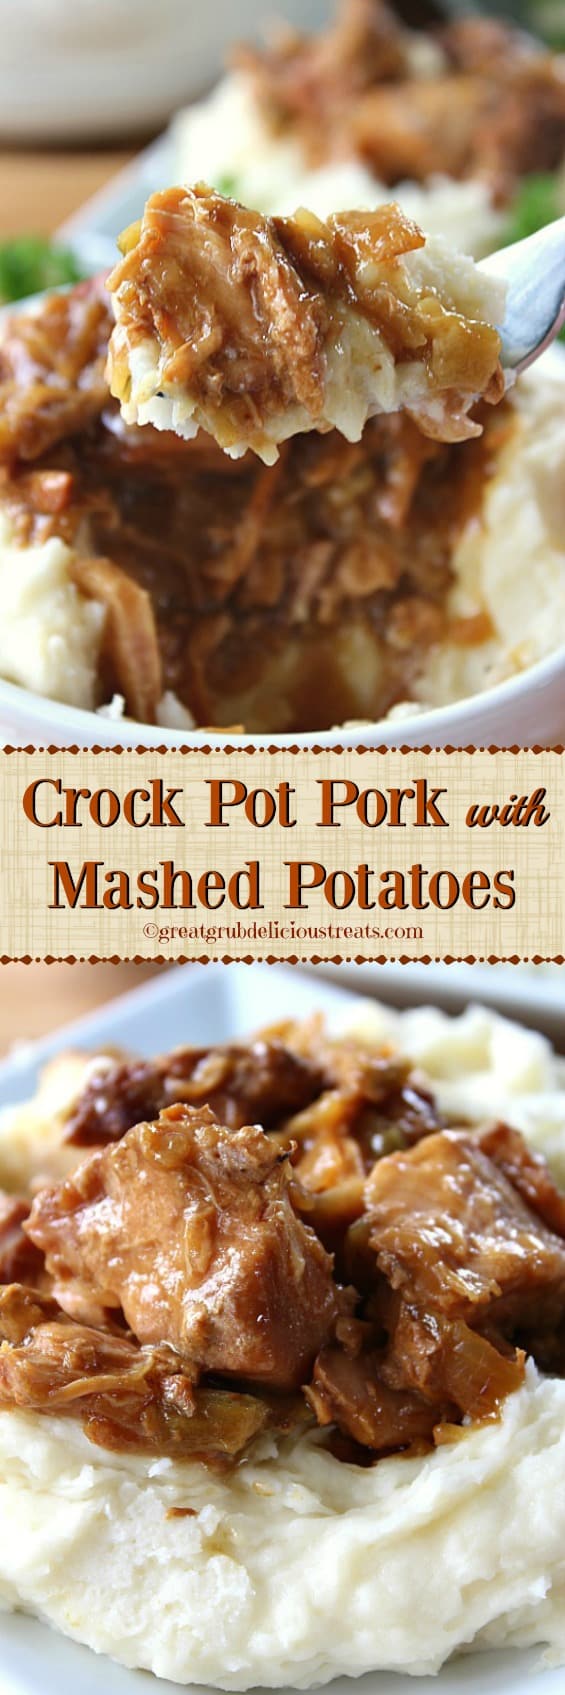 Crock Pot Pork with Mashed Potatoes